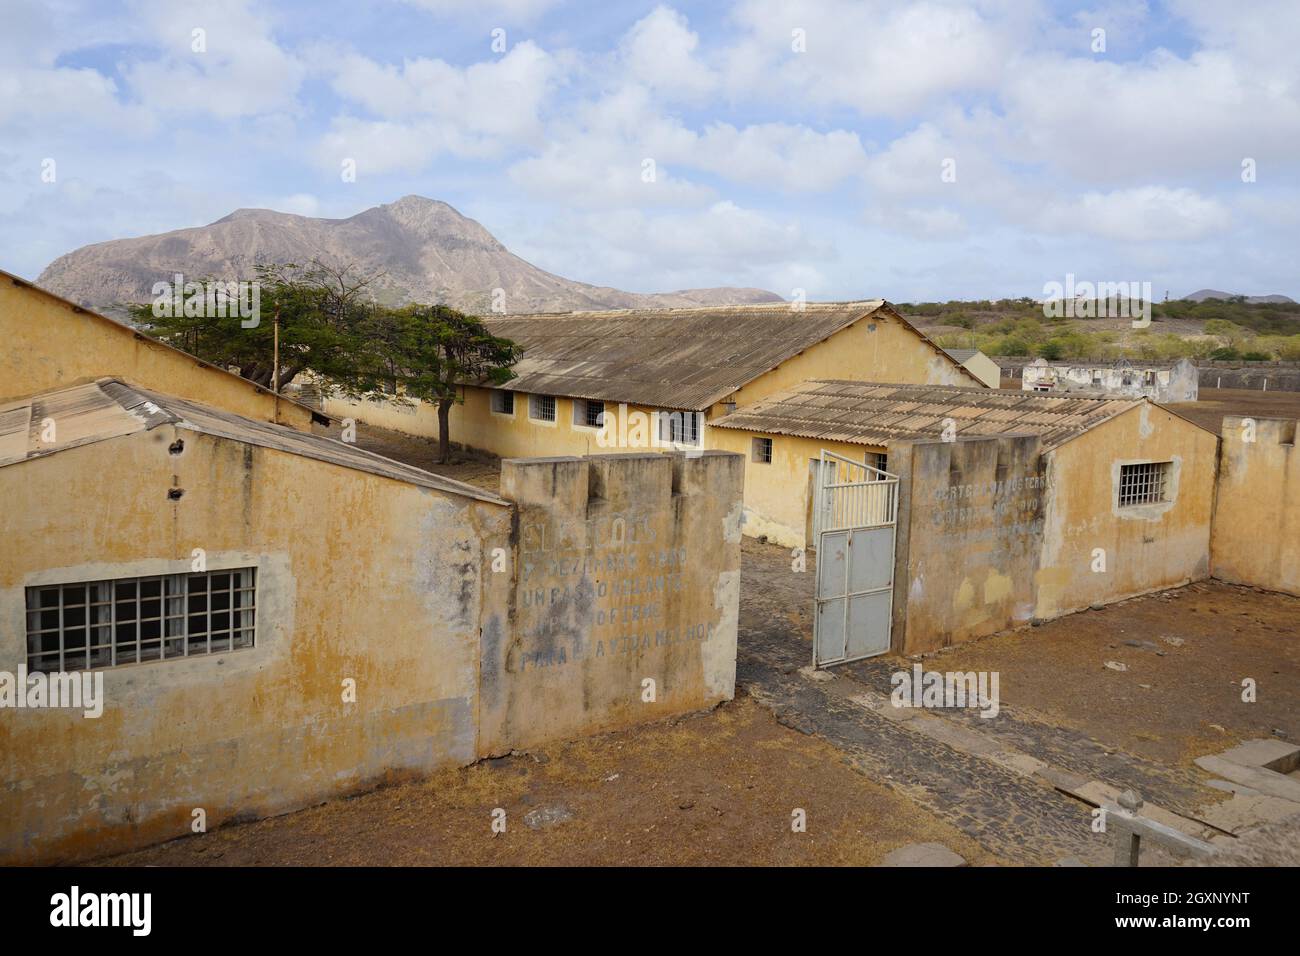 Prisoners' quarters, Tarrafal concentration camp, Monte Graciosa in the background, Santiago Island, Republic of Cape Verde Stock Photo